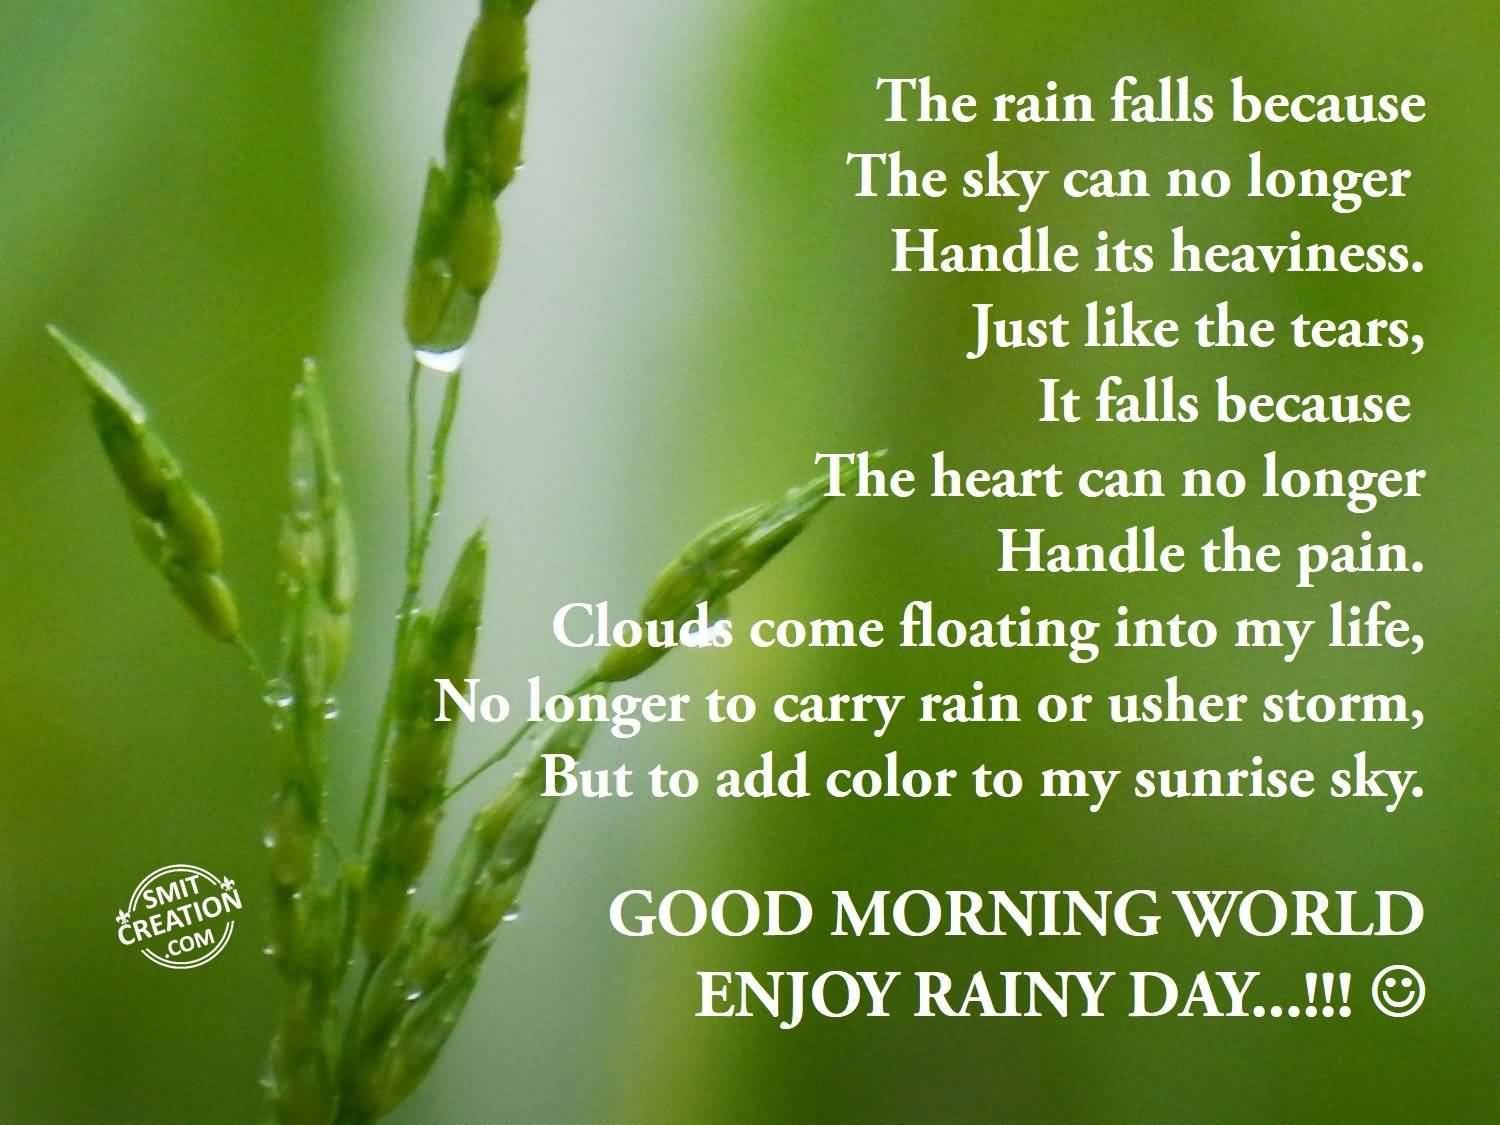 Good Morning World Enjoy Rainy Day